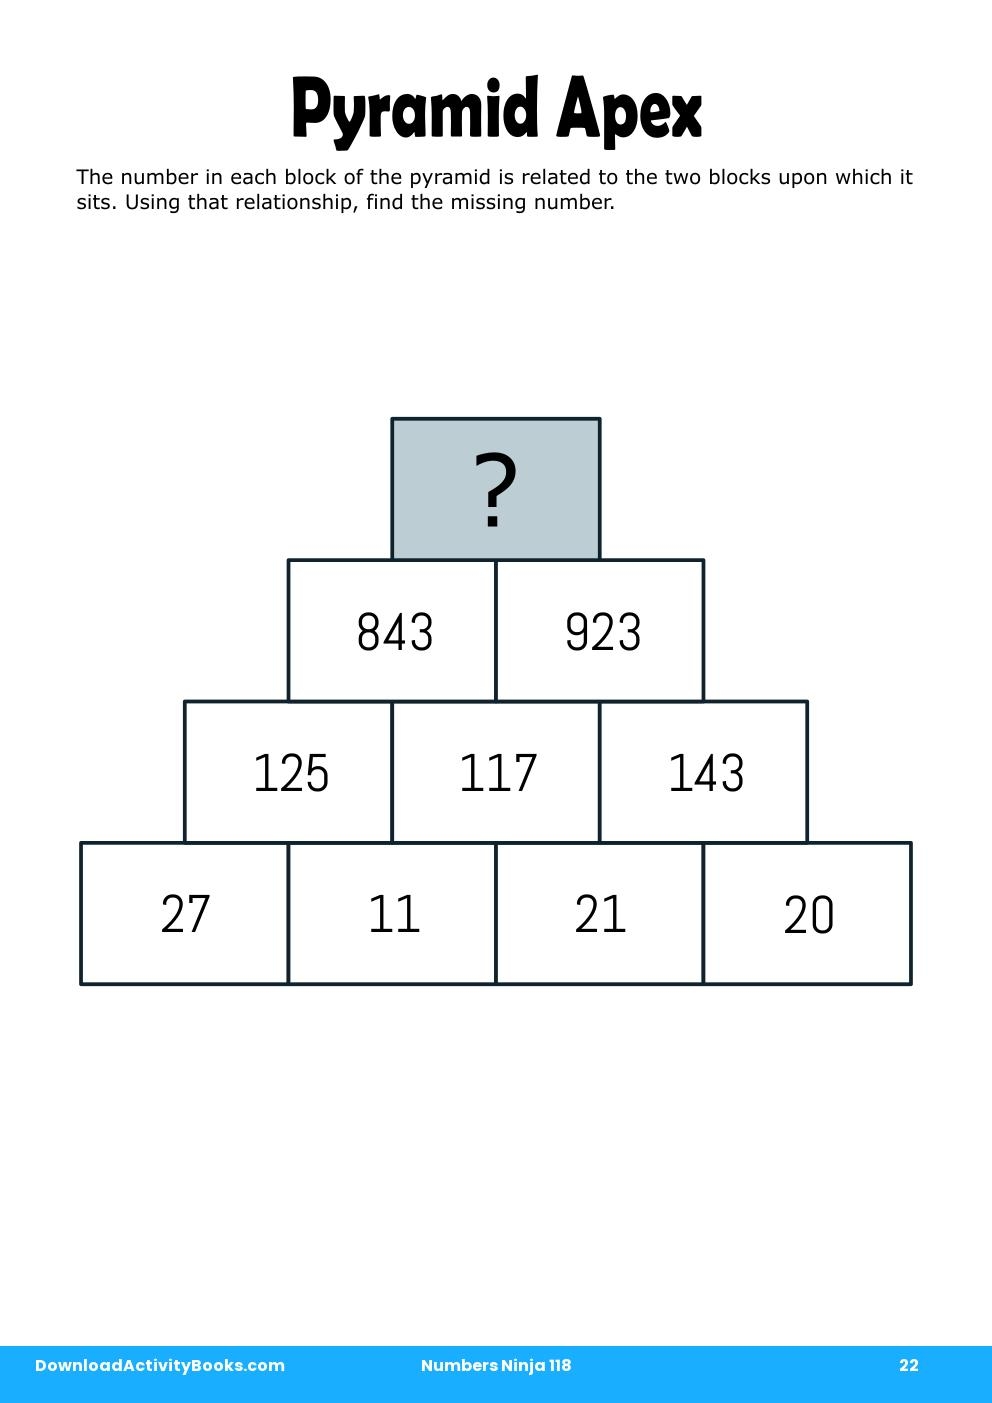 Pyramid Apex in Numbers Ninja 118